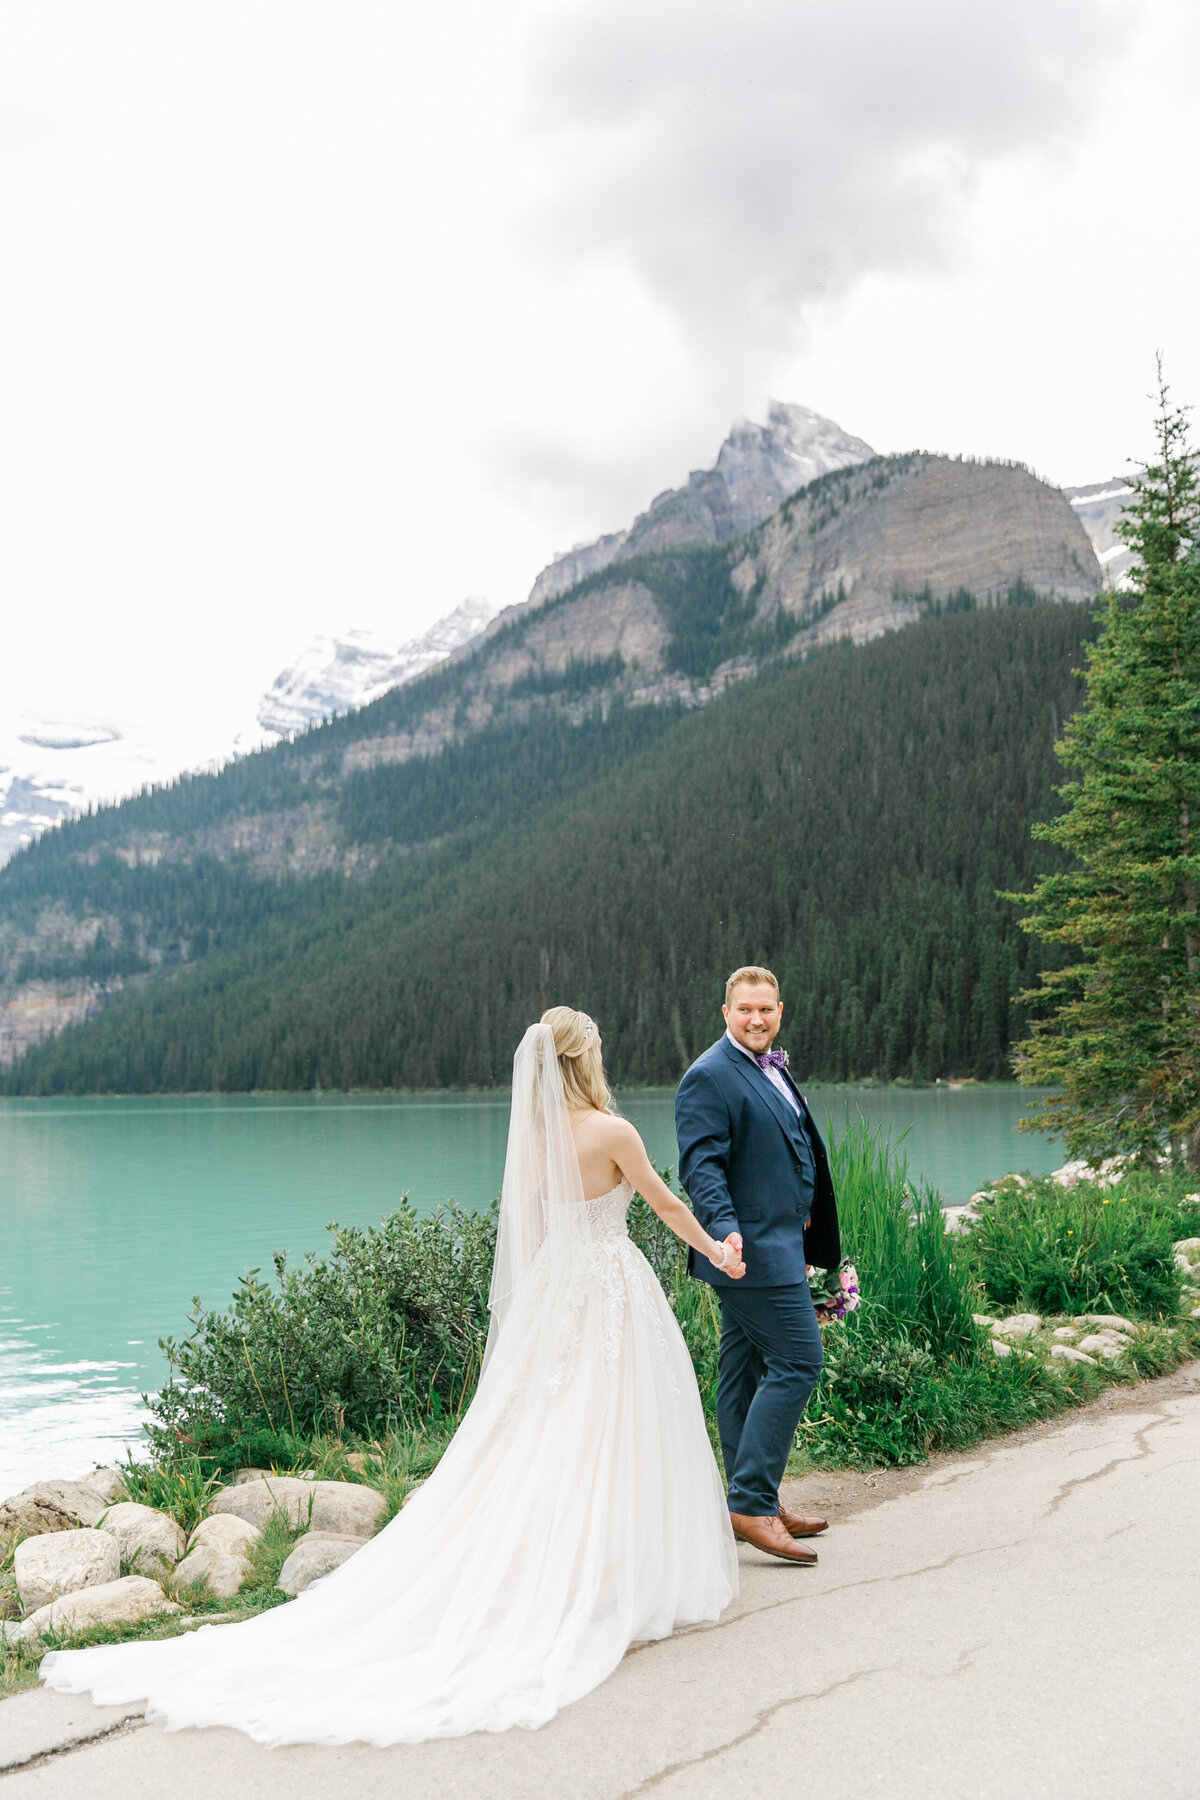 Karlie Colleen Photography - Fairmont Chateau Lake Louise Wedding - Banff Canada - Sara & Drew Forsberg-1040